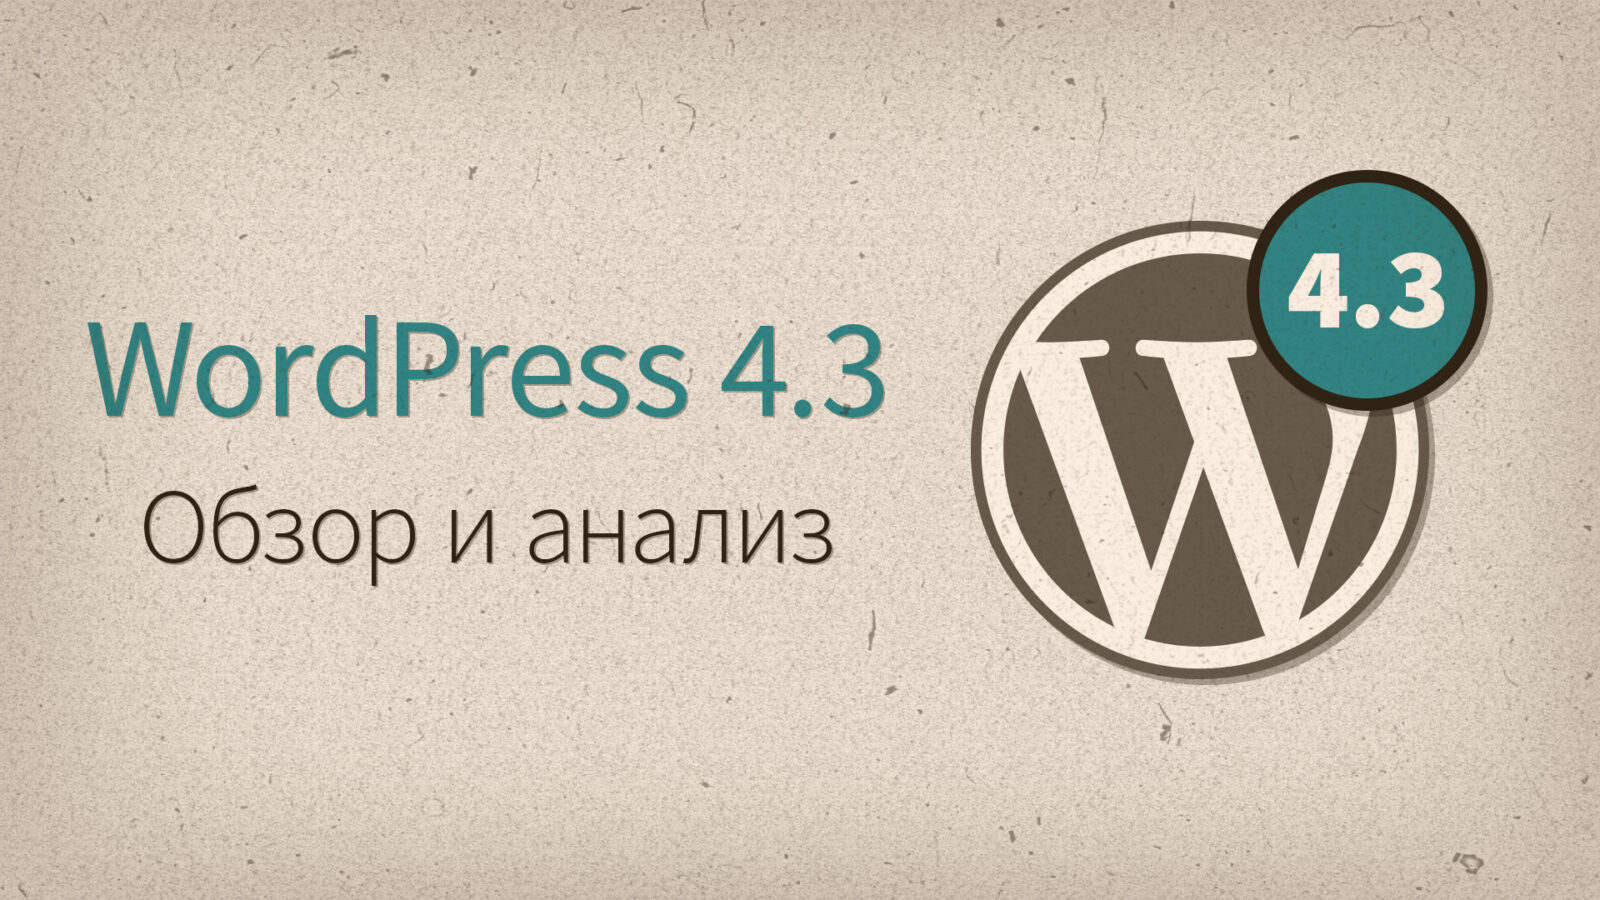 WordPress 4.3 — обзор релиза и плагинов